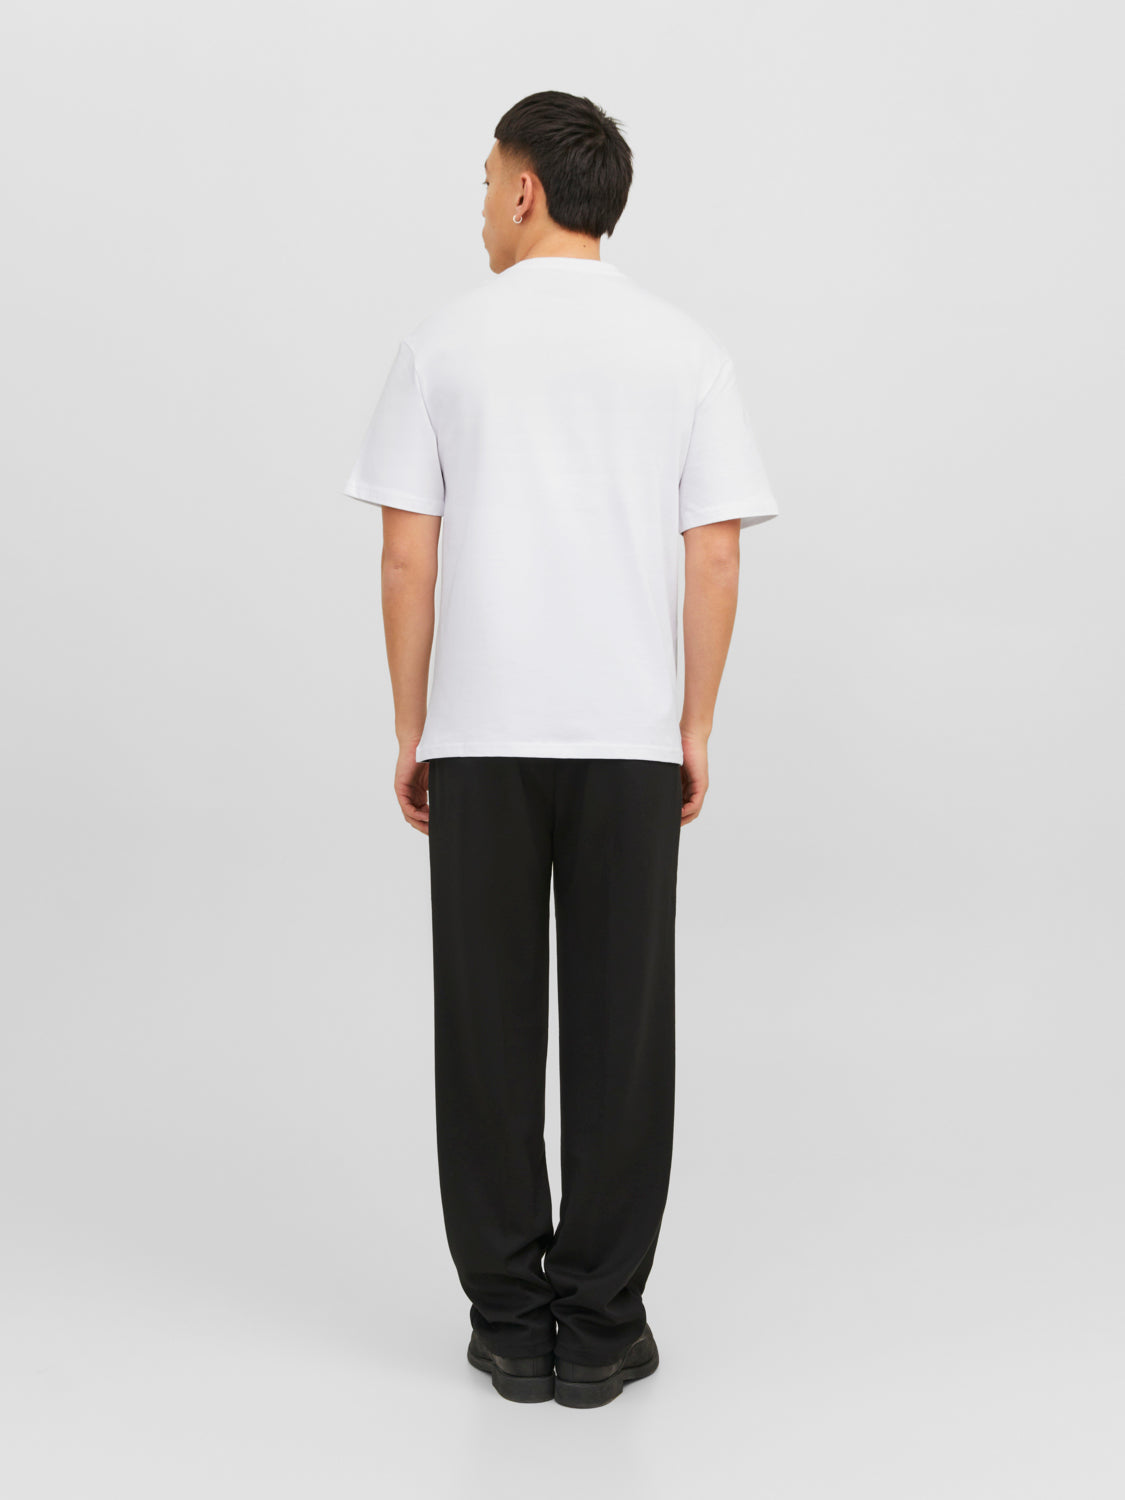 JORVESTERBRO T-Shirt - Bright White